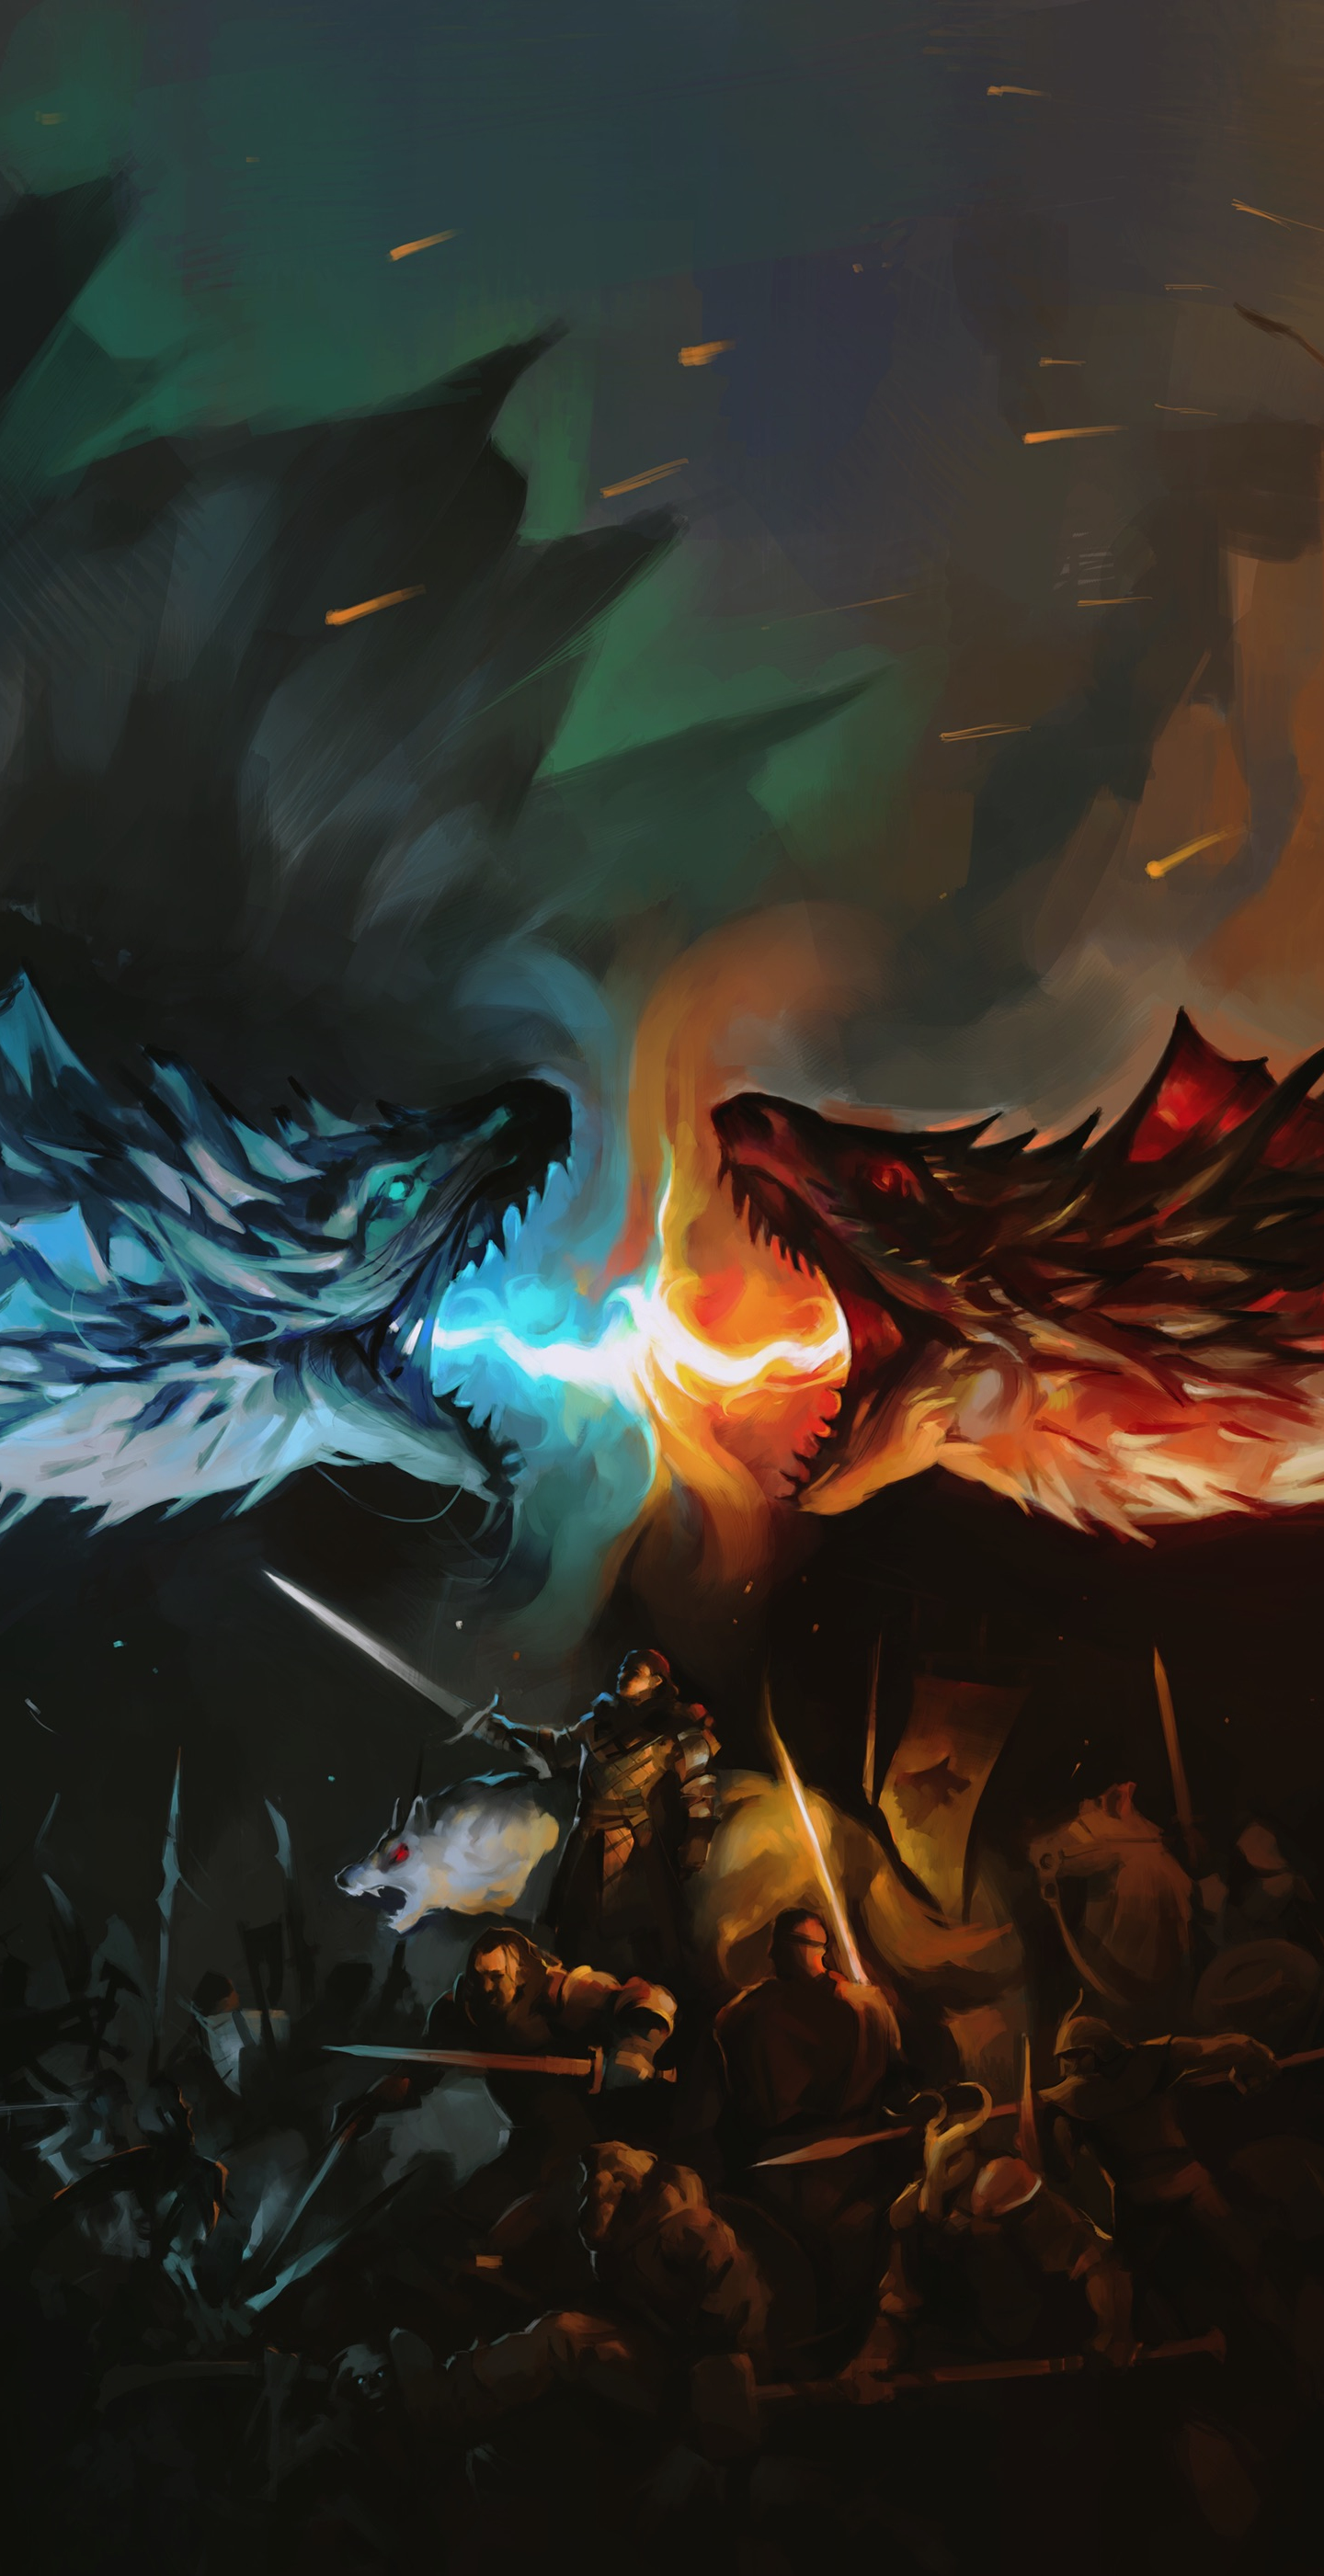 Download 1440x2960 Wallpaper Game Of Thrones Tv Series Dragons